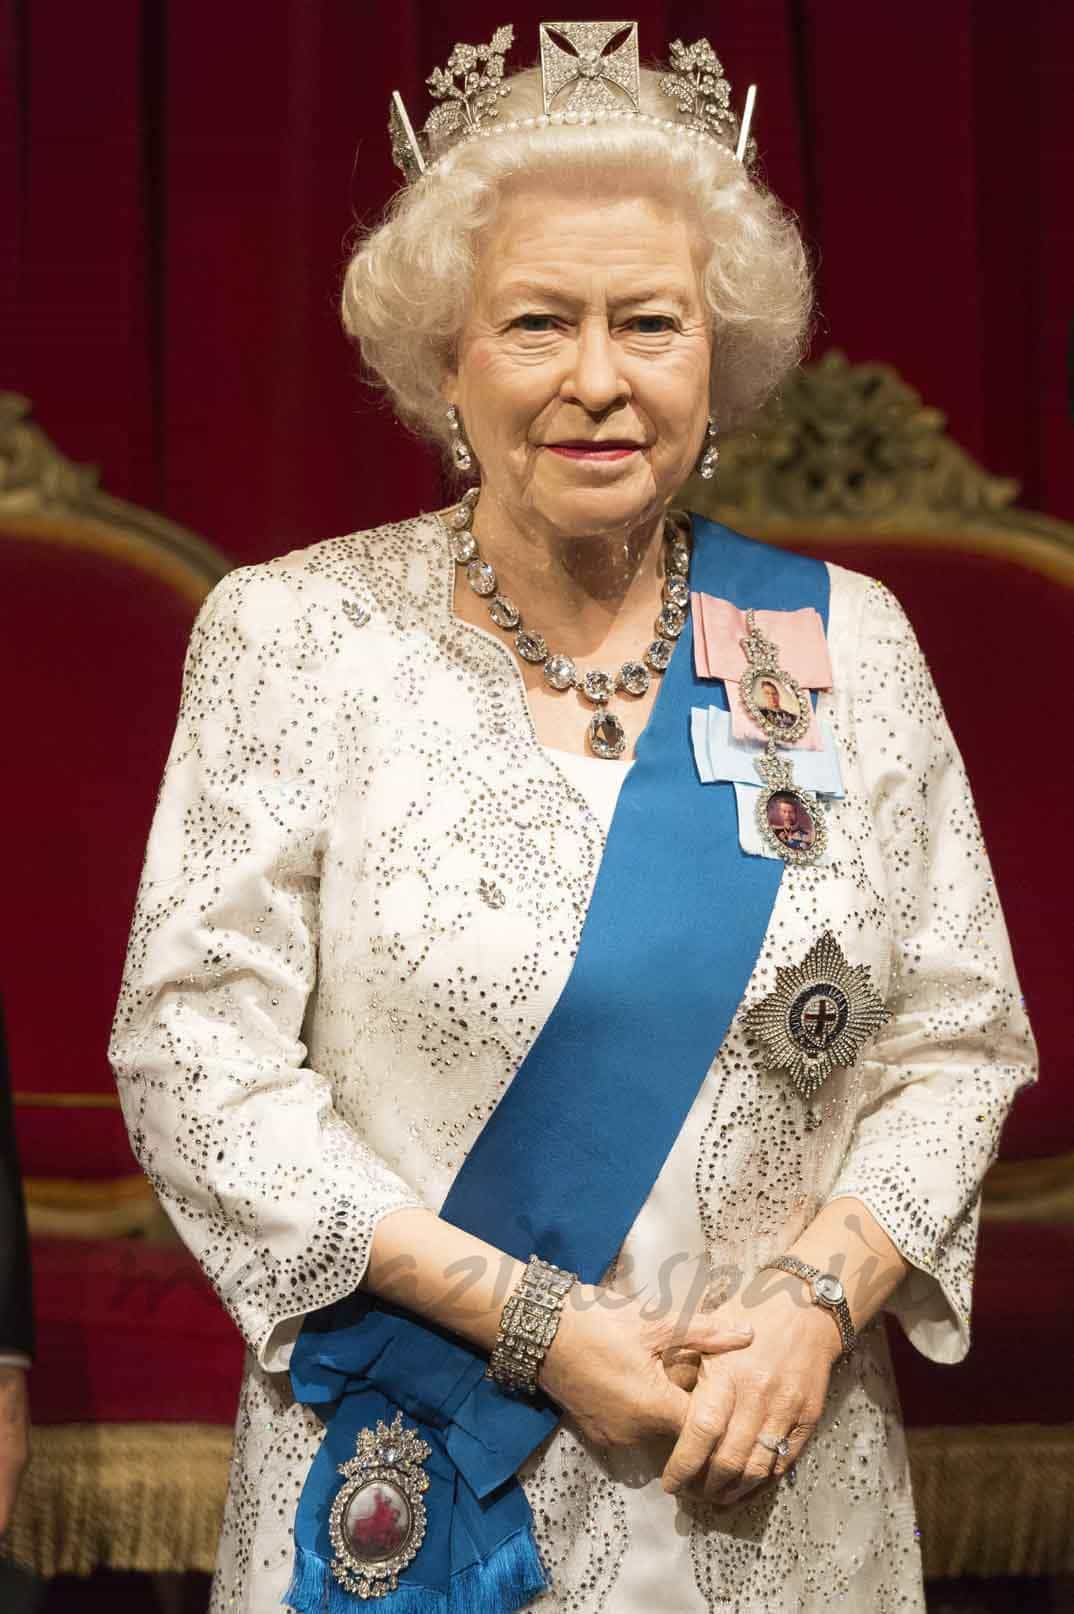 museo-madame-tussauds-londres celebra el cumpleaños de la reina isabel de inglaterra